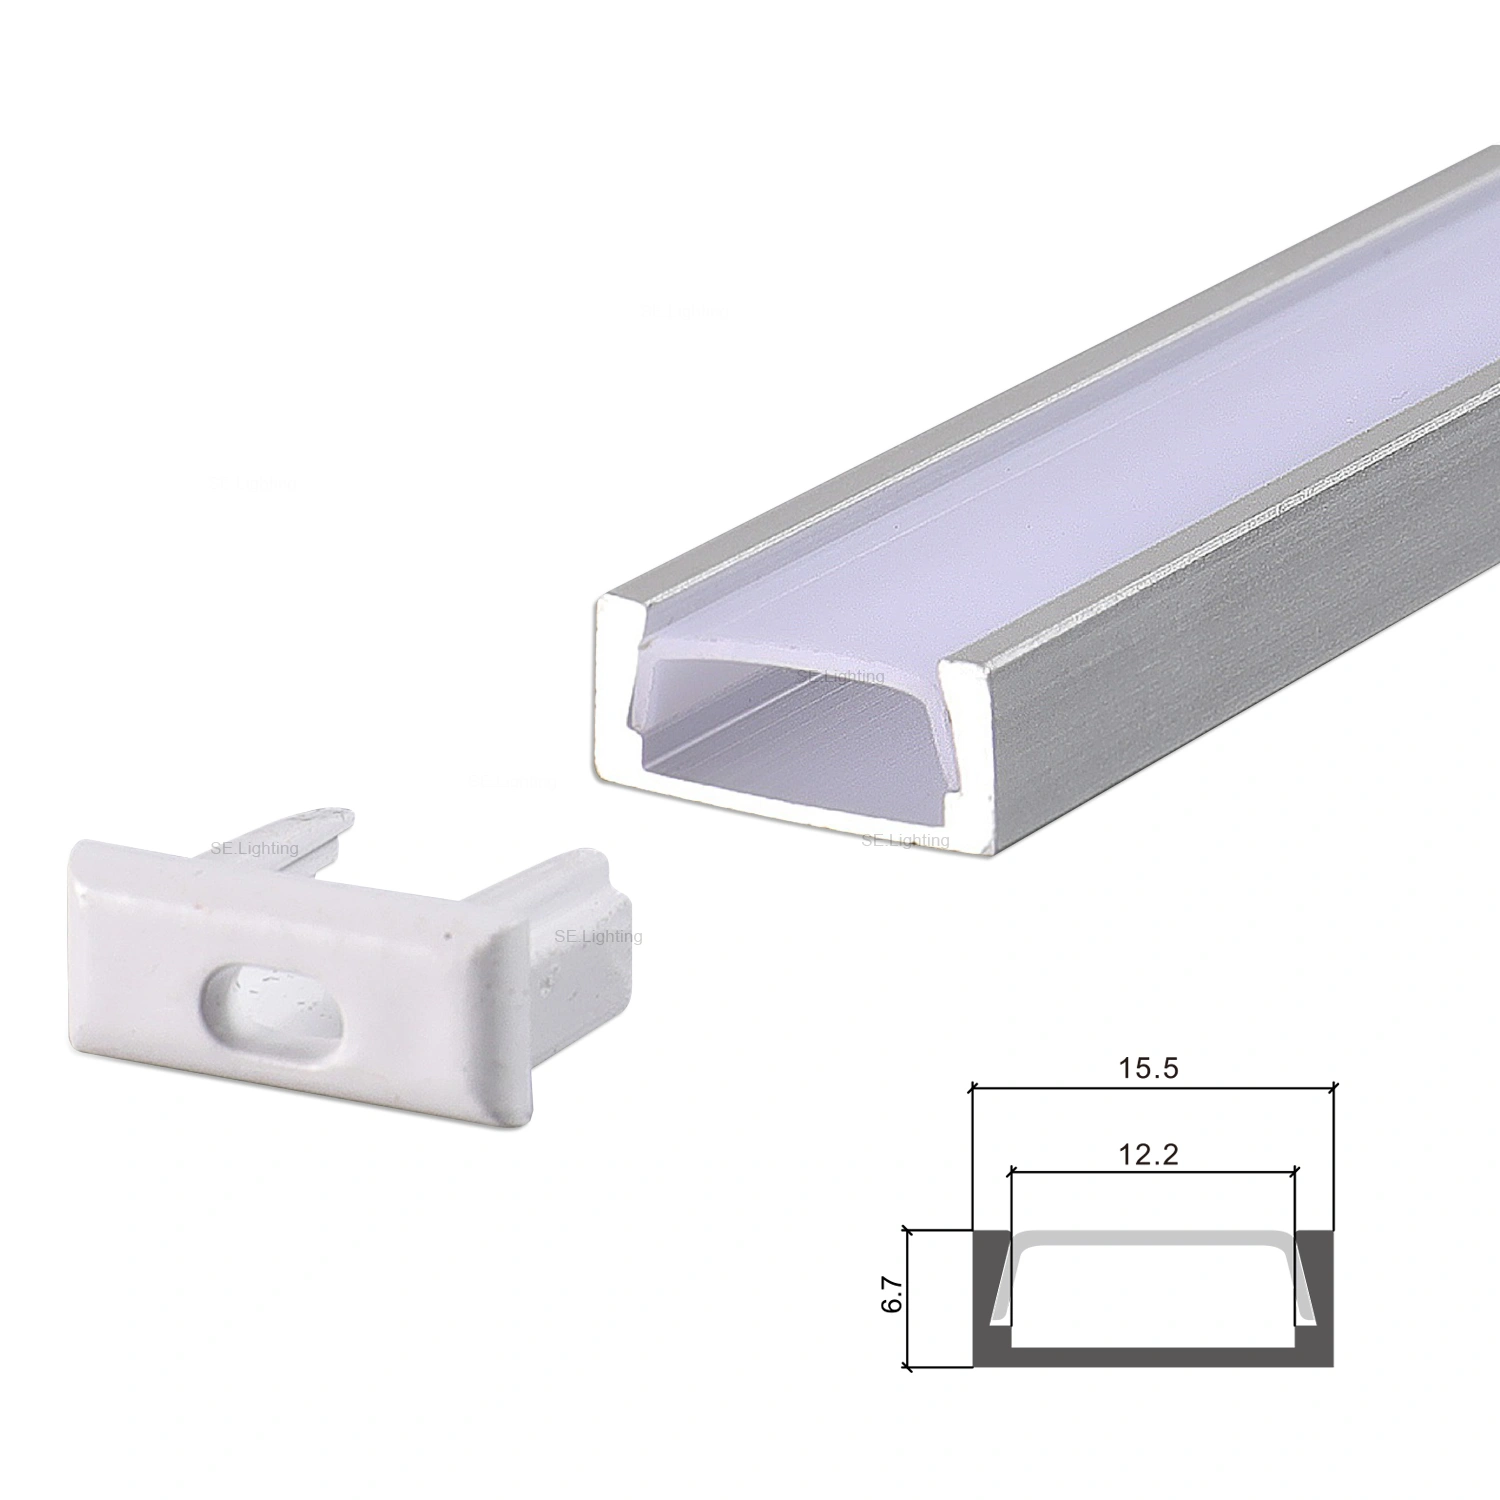 15x06mm LED Aluminum Profiles